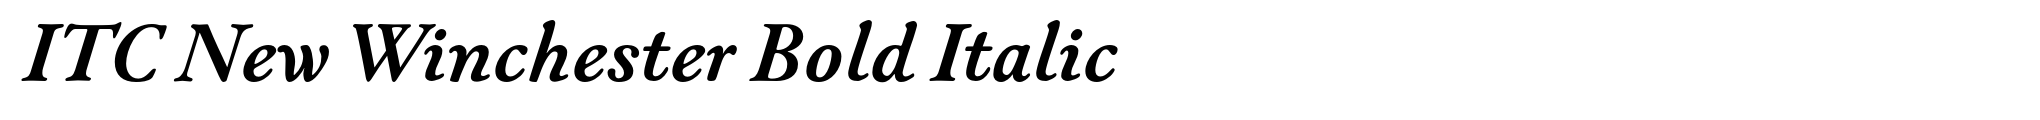 ITC New Winchester Bold Italic image